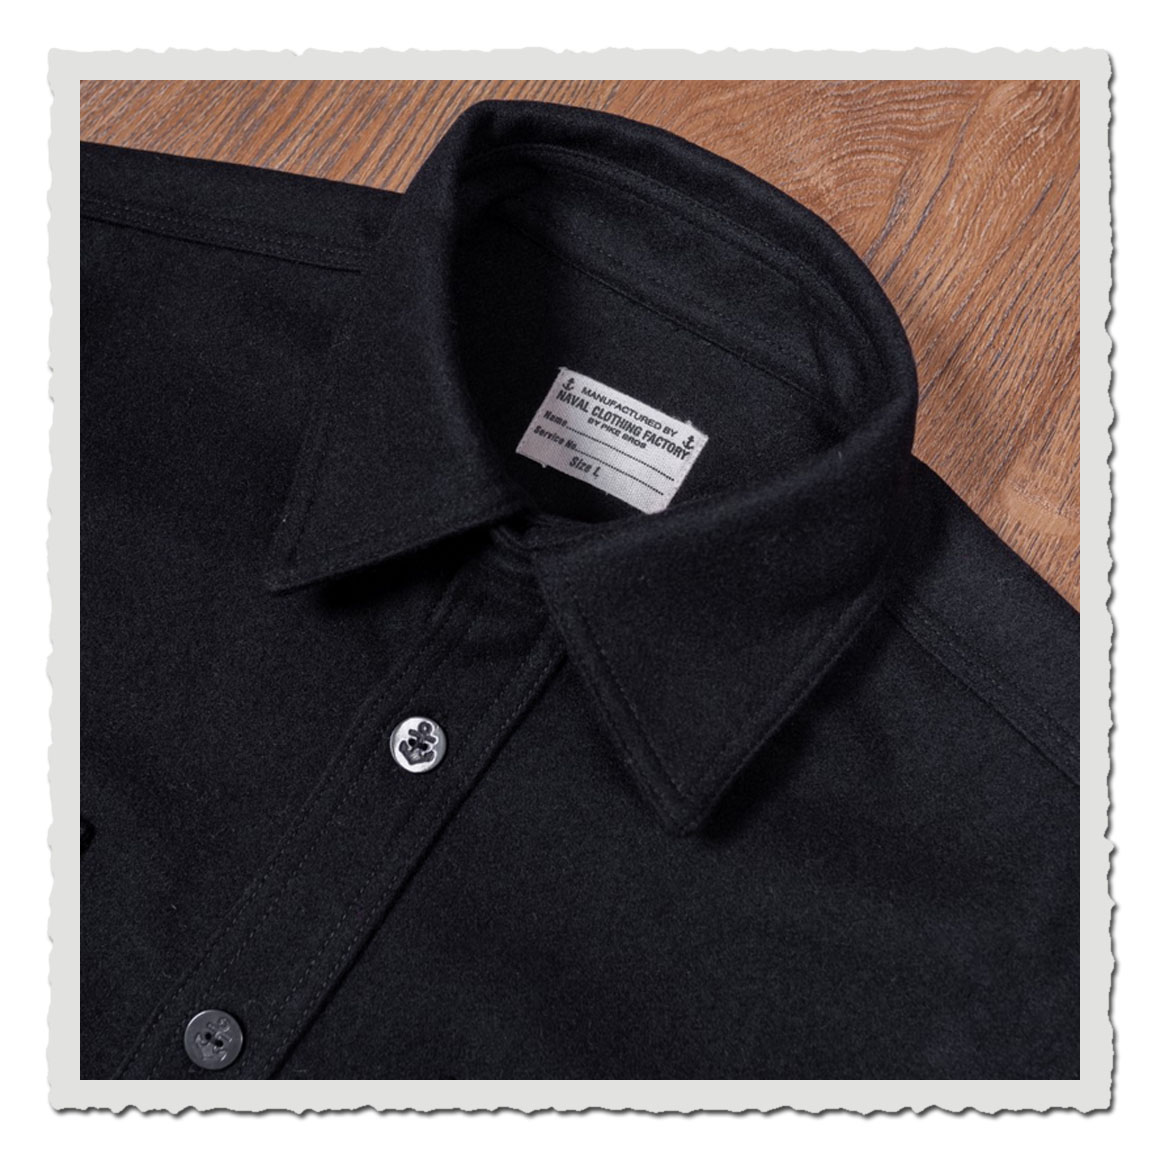 1943 CPO Shirt black wool